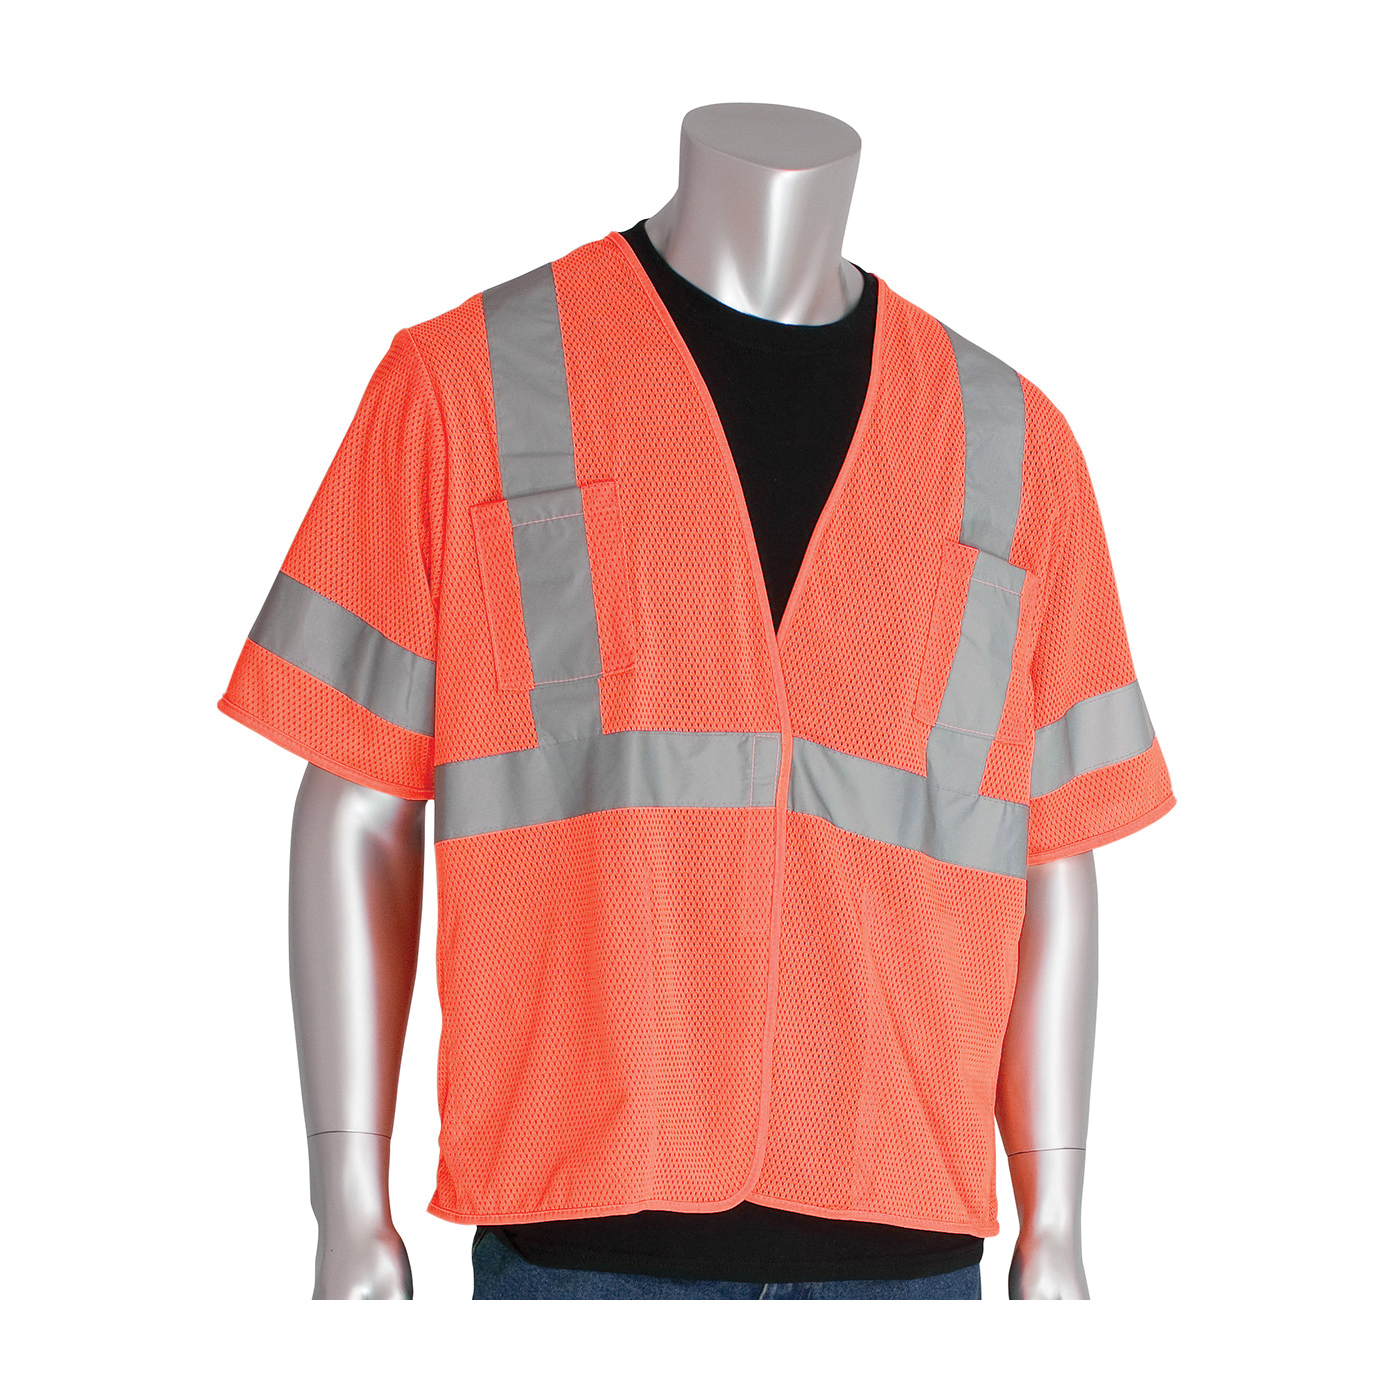 PIP® 303-HSVEOR-4X Safety Vest, 4XL, Hi-Viz Orange, Polyester Mesh, Hook and Loop Closure, 4 Pockets, ANSI Class: Class 3, ANSI 107 Type R